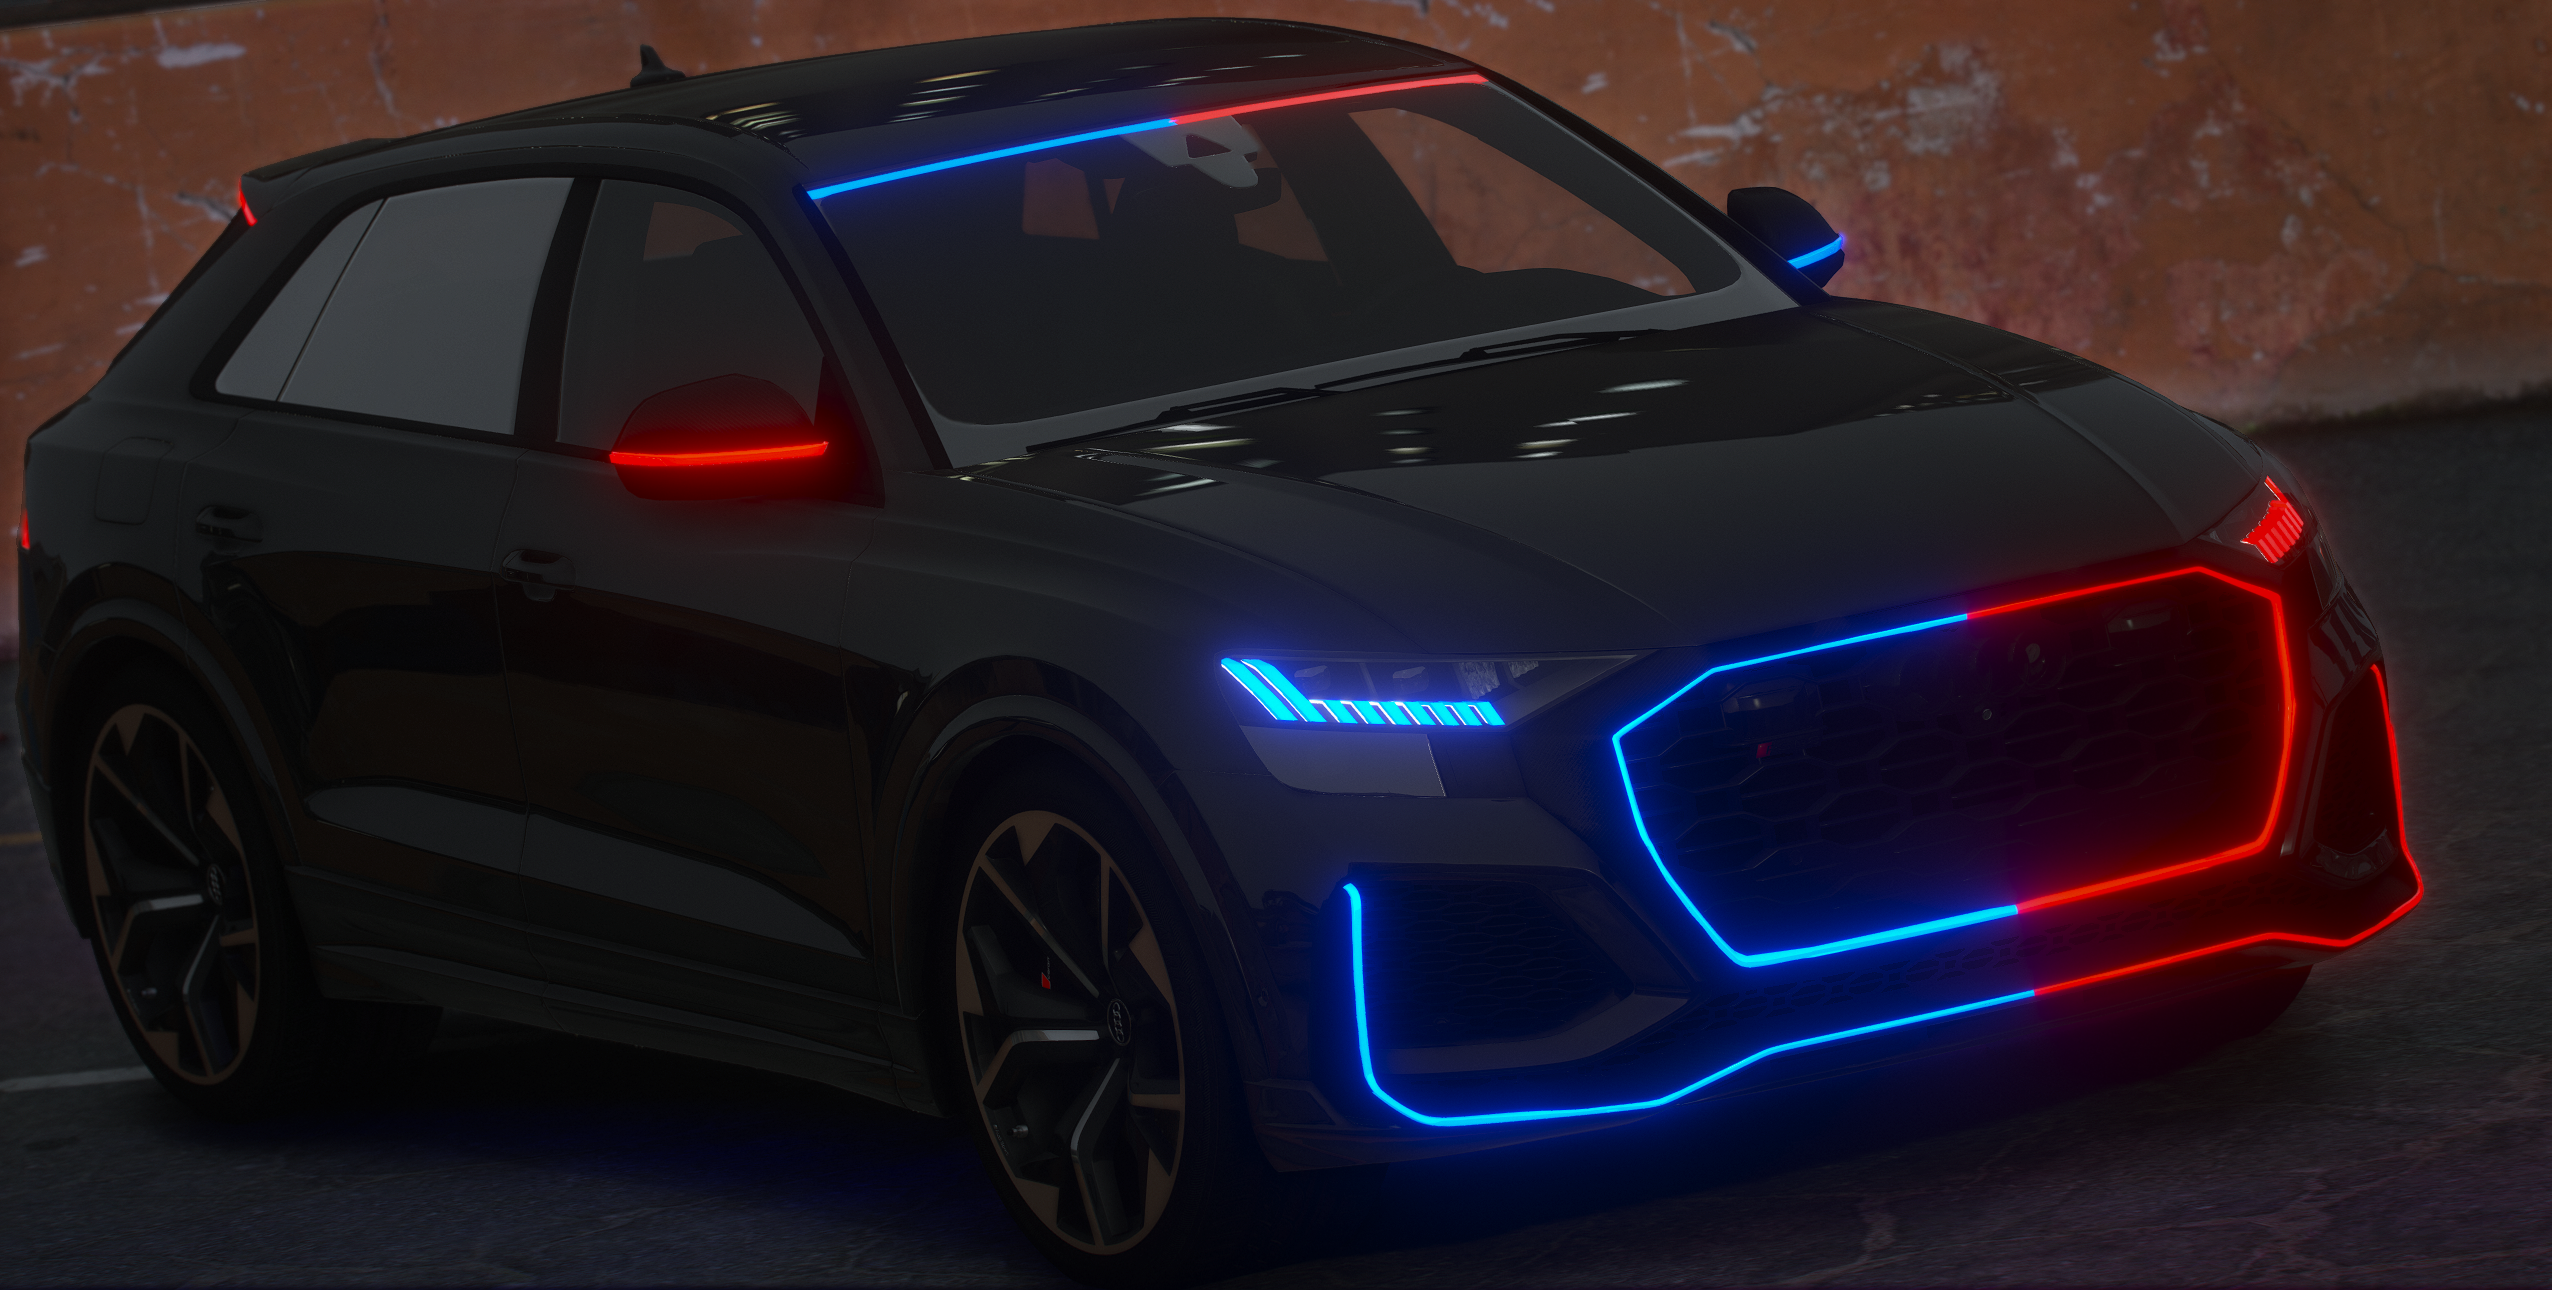 2020 Audi RSQ8 FiveM Police Vehicle